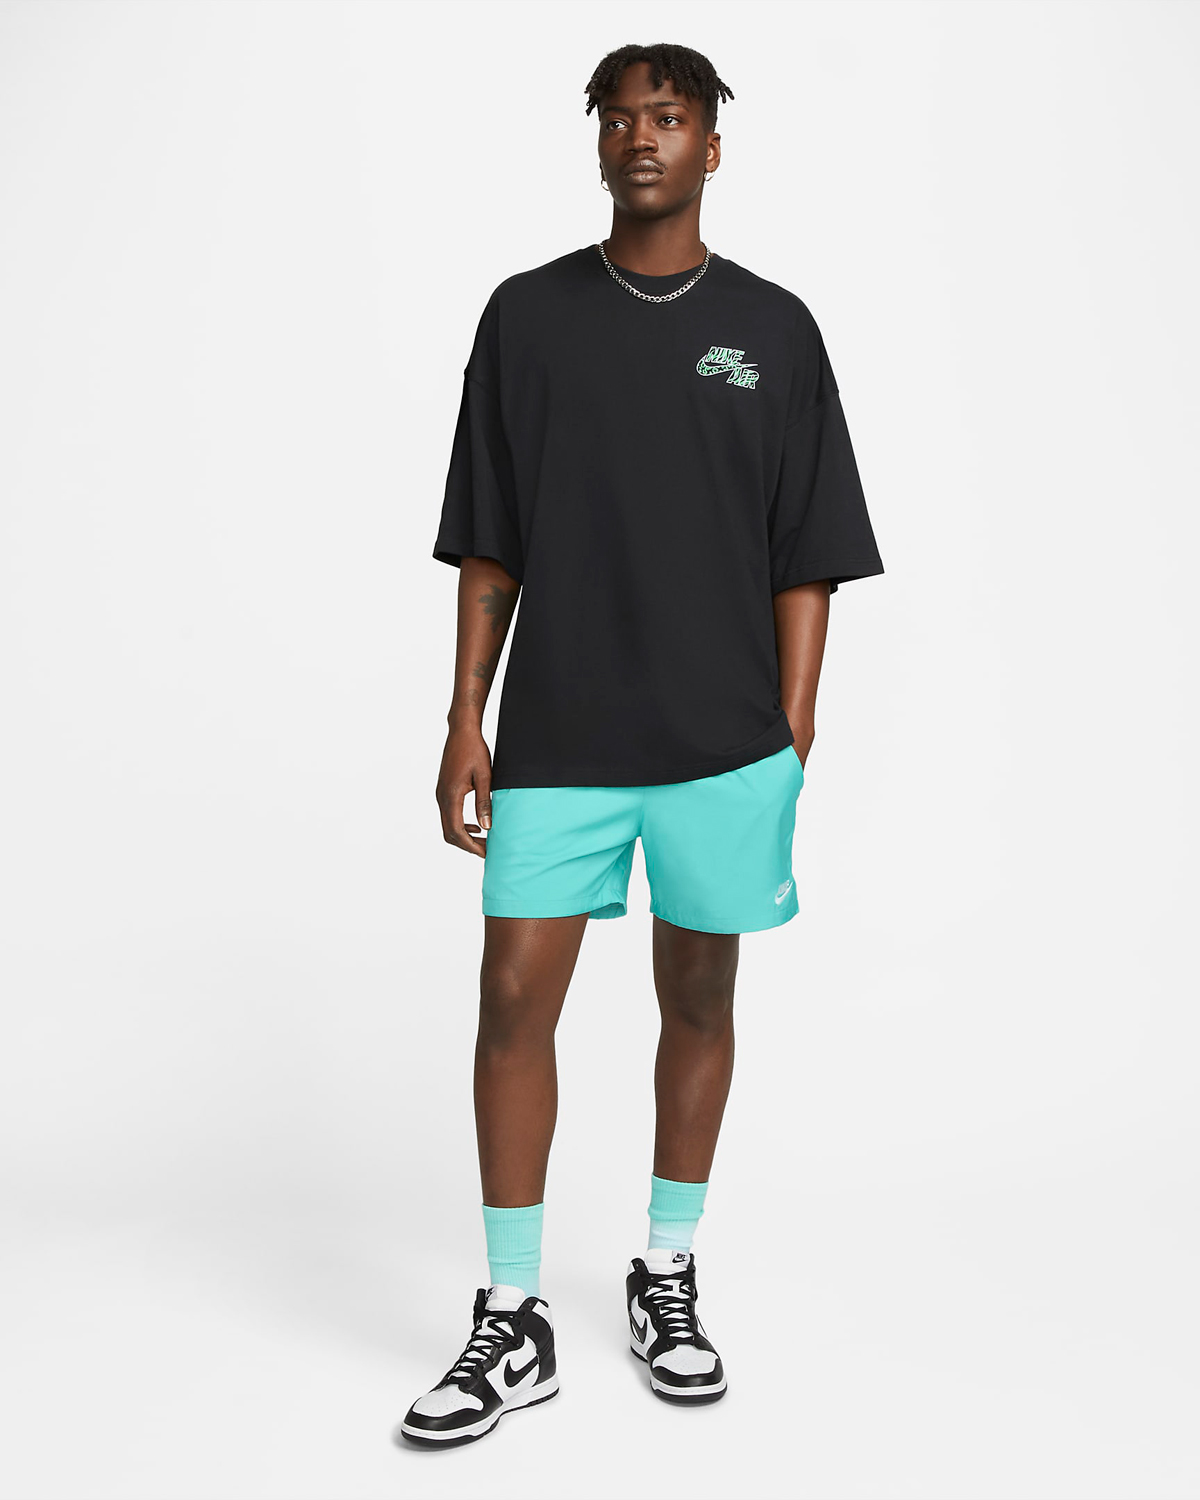 Nike Dunk High Panda Restock Shirts and Outfits